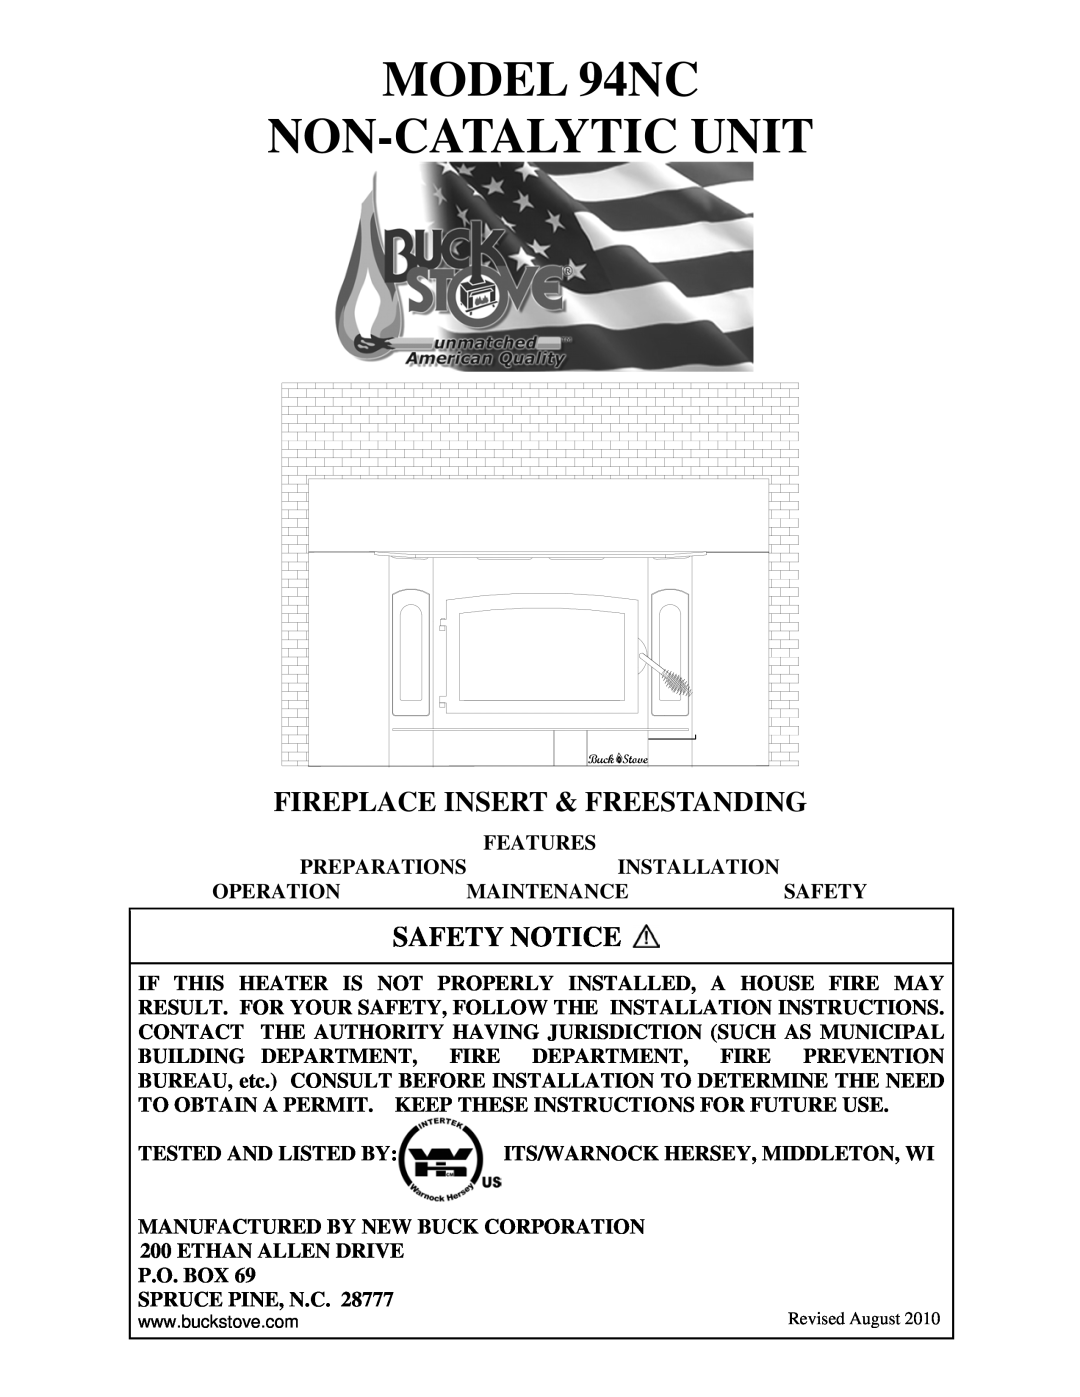 New Buck Corporation 94NC installation instructions Fireplace Insert & Freestanding, Safety Notice 